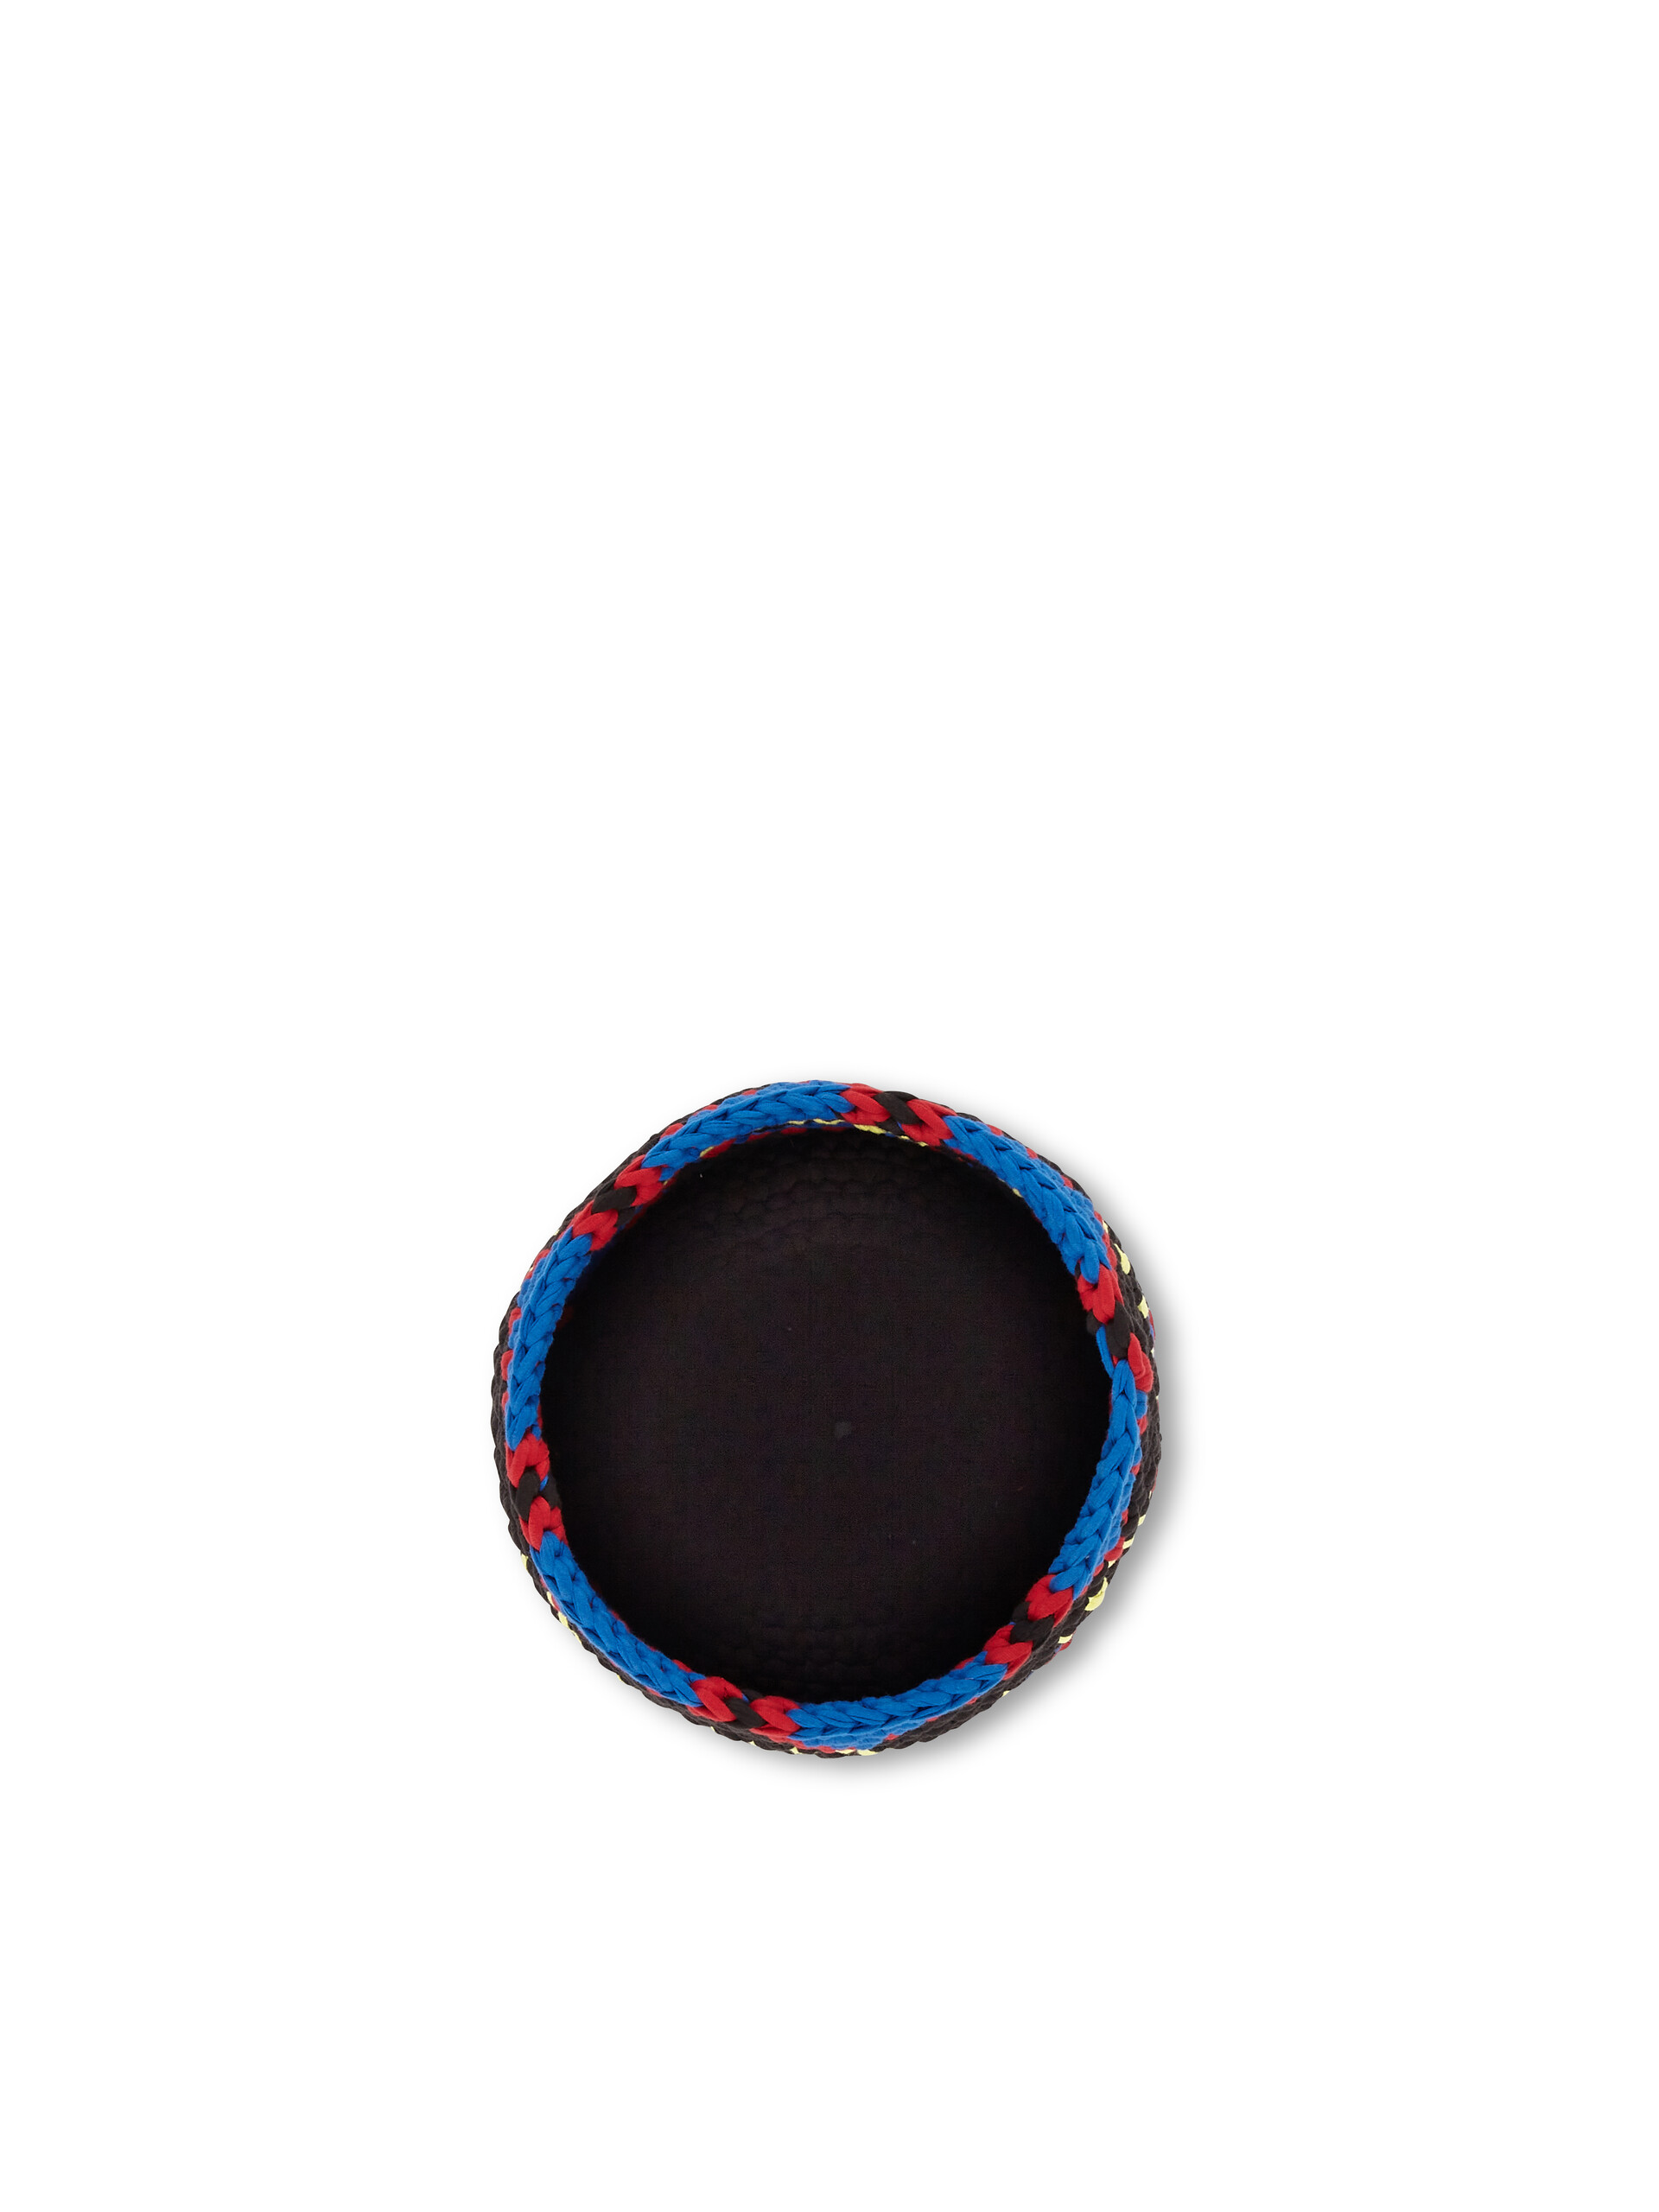 Medium MARNI MARKET vase holder in blue and black crochet - Furniture - Image 4